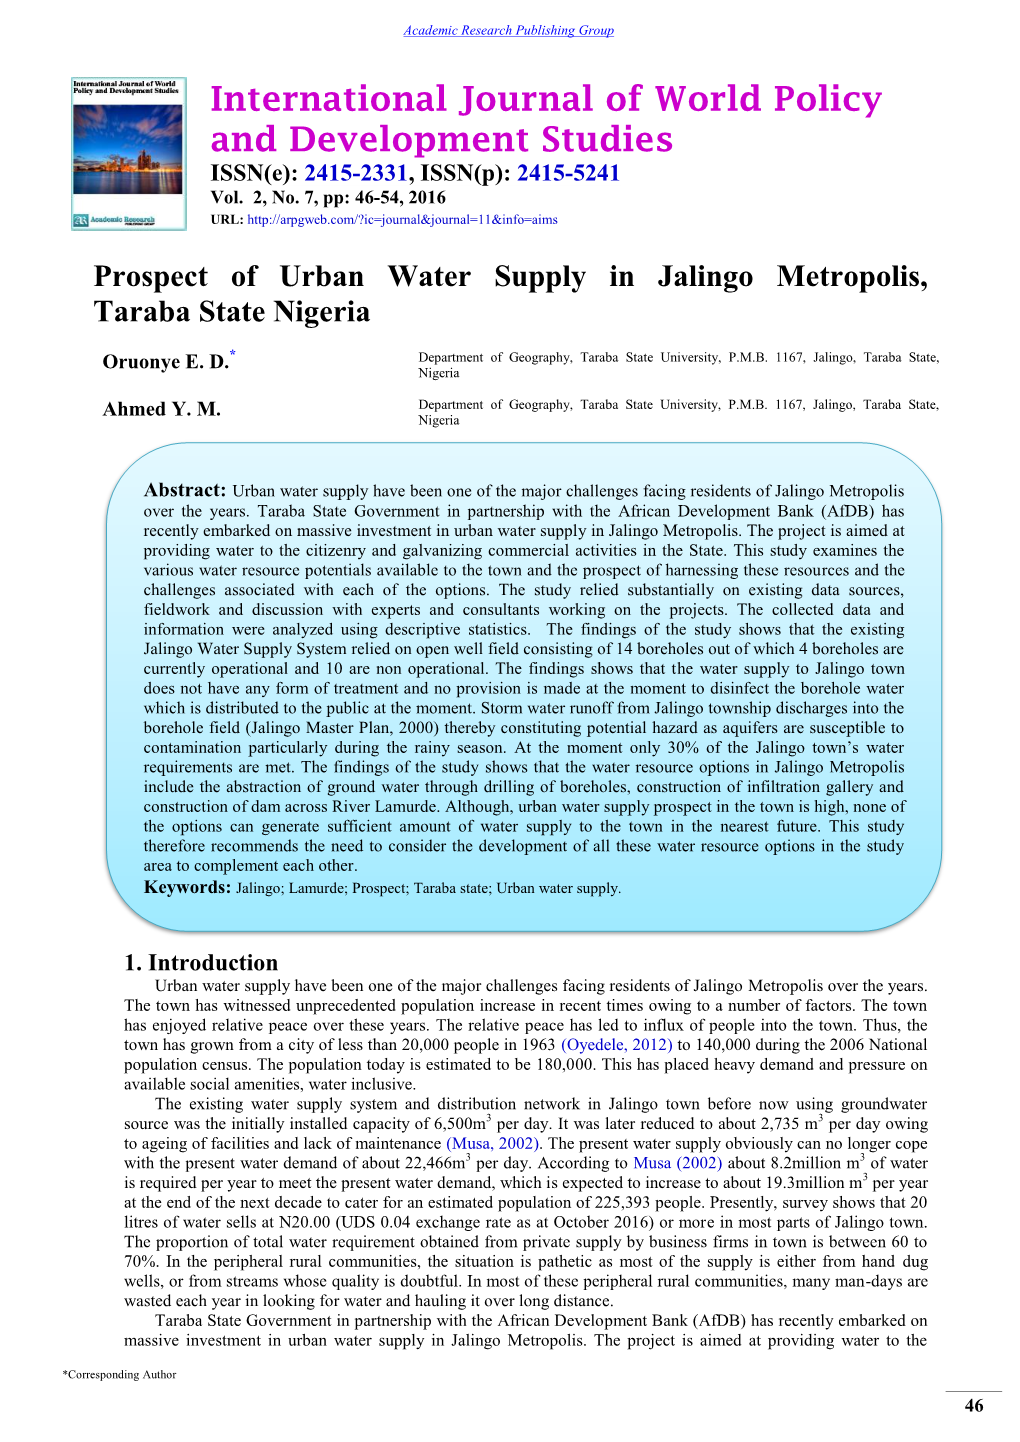 Prospect of Urban Water Supply in Jalingo Metropolis, Taraba State Nigeria